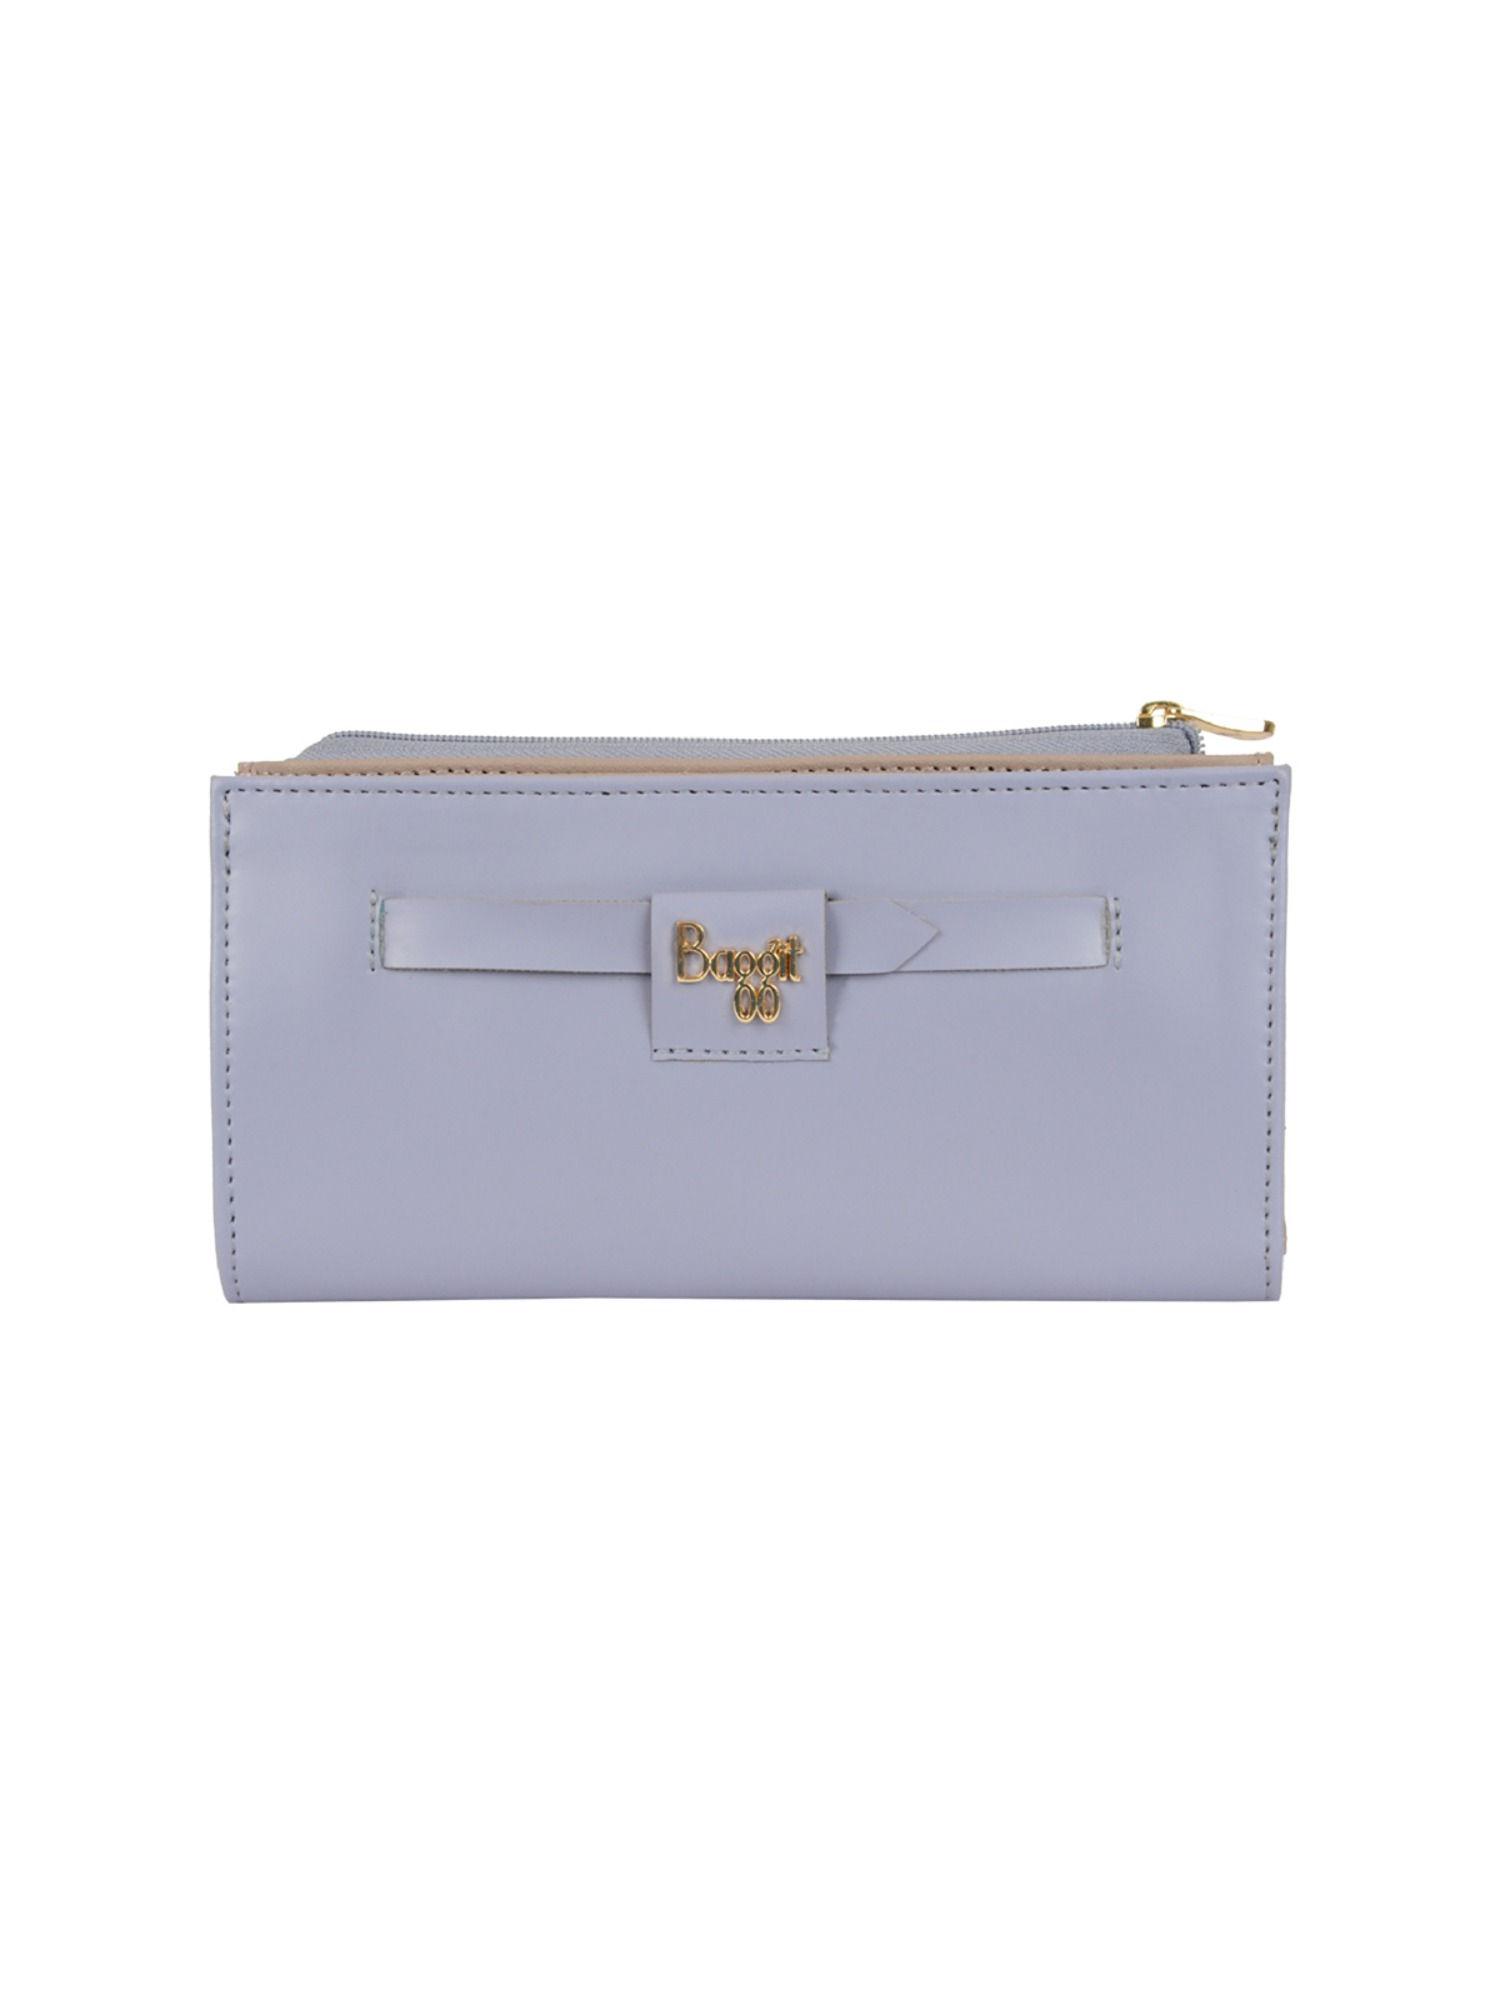 moa large purple 2 fold wallet